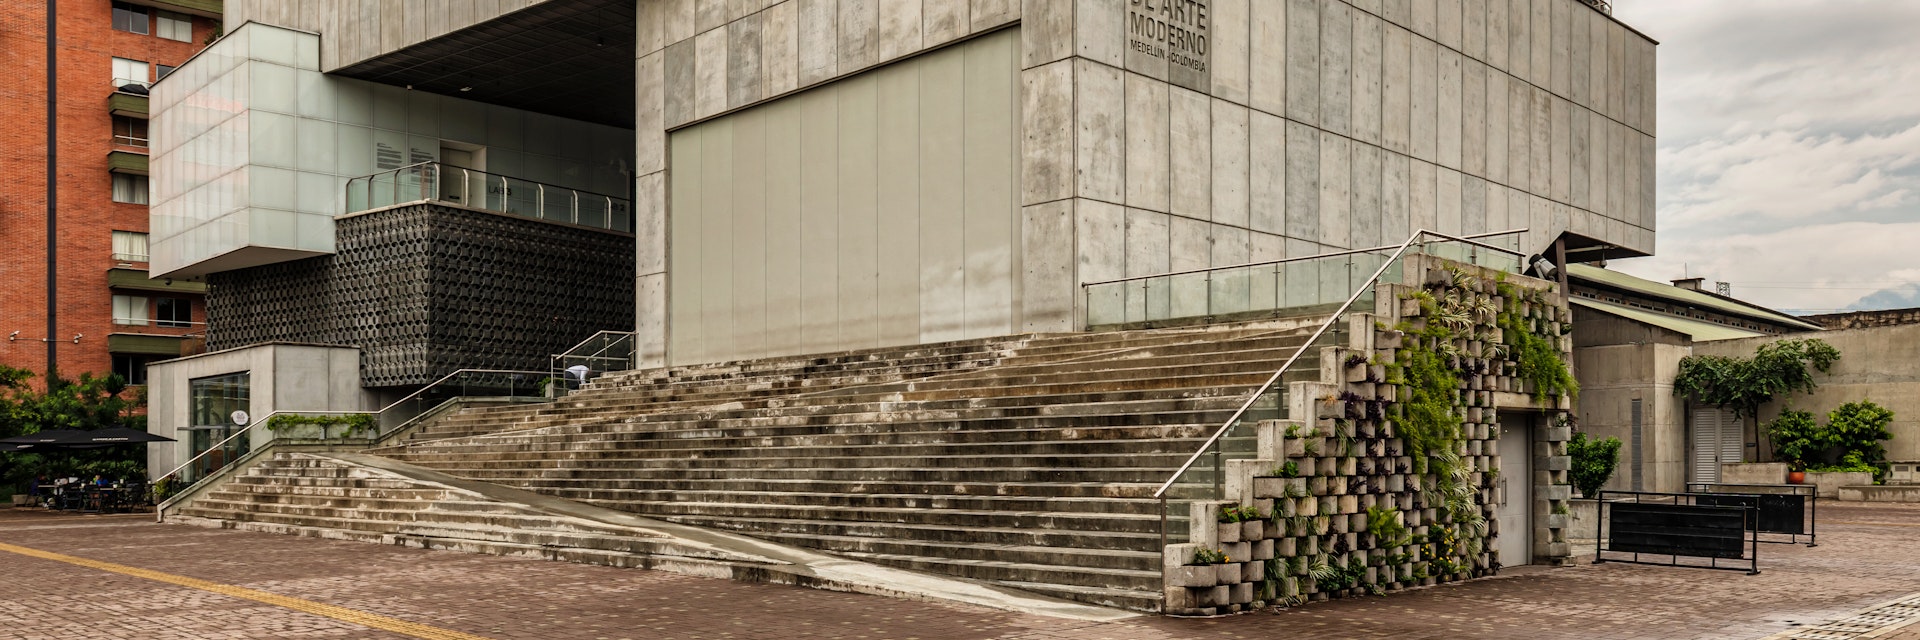 Museum of modern art building in Medellin, Colombia.